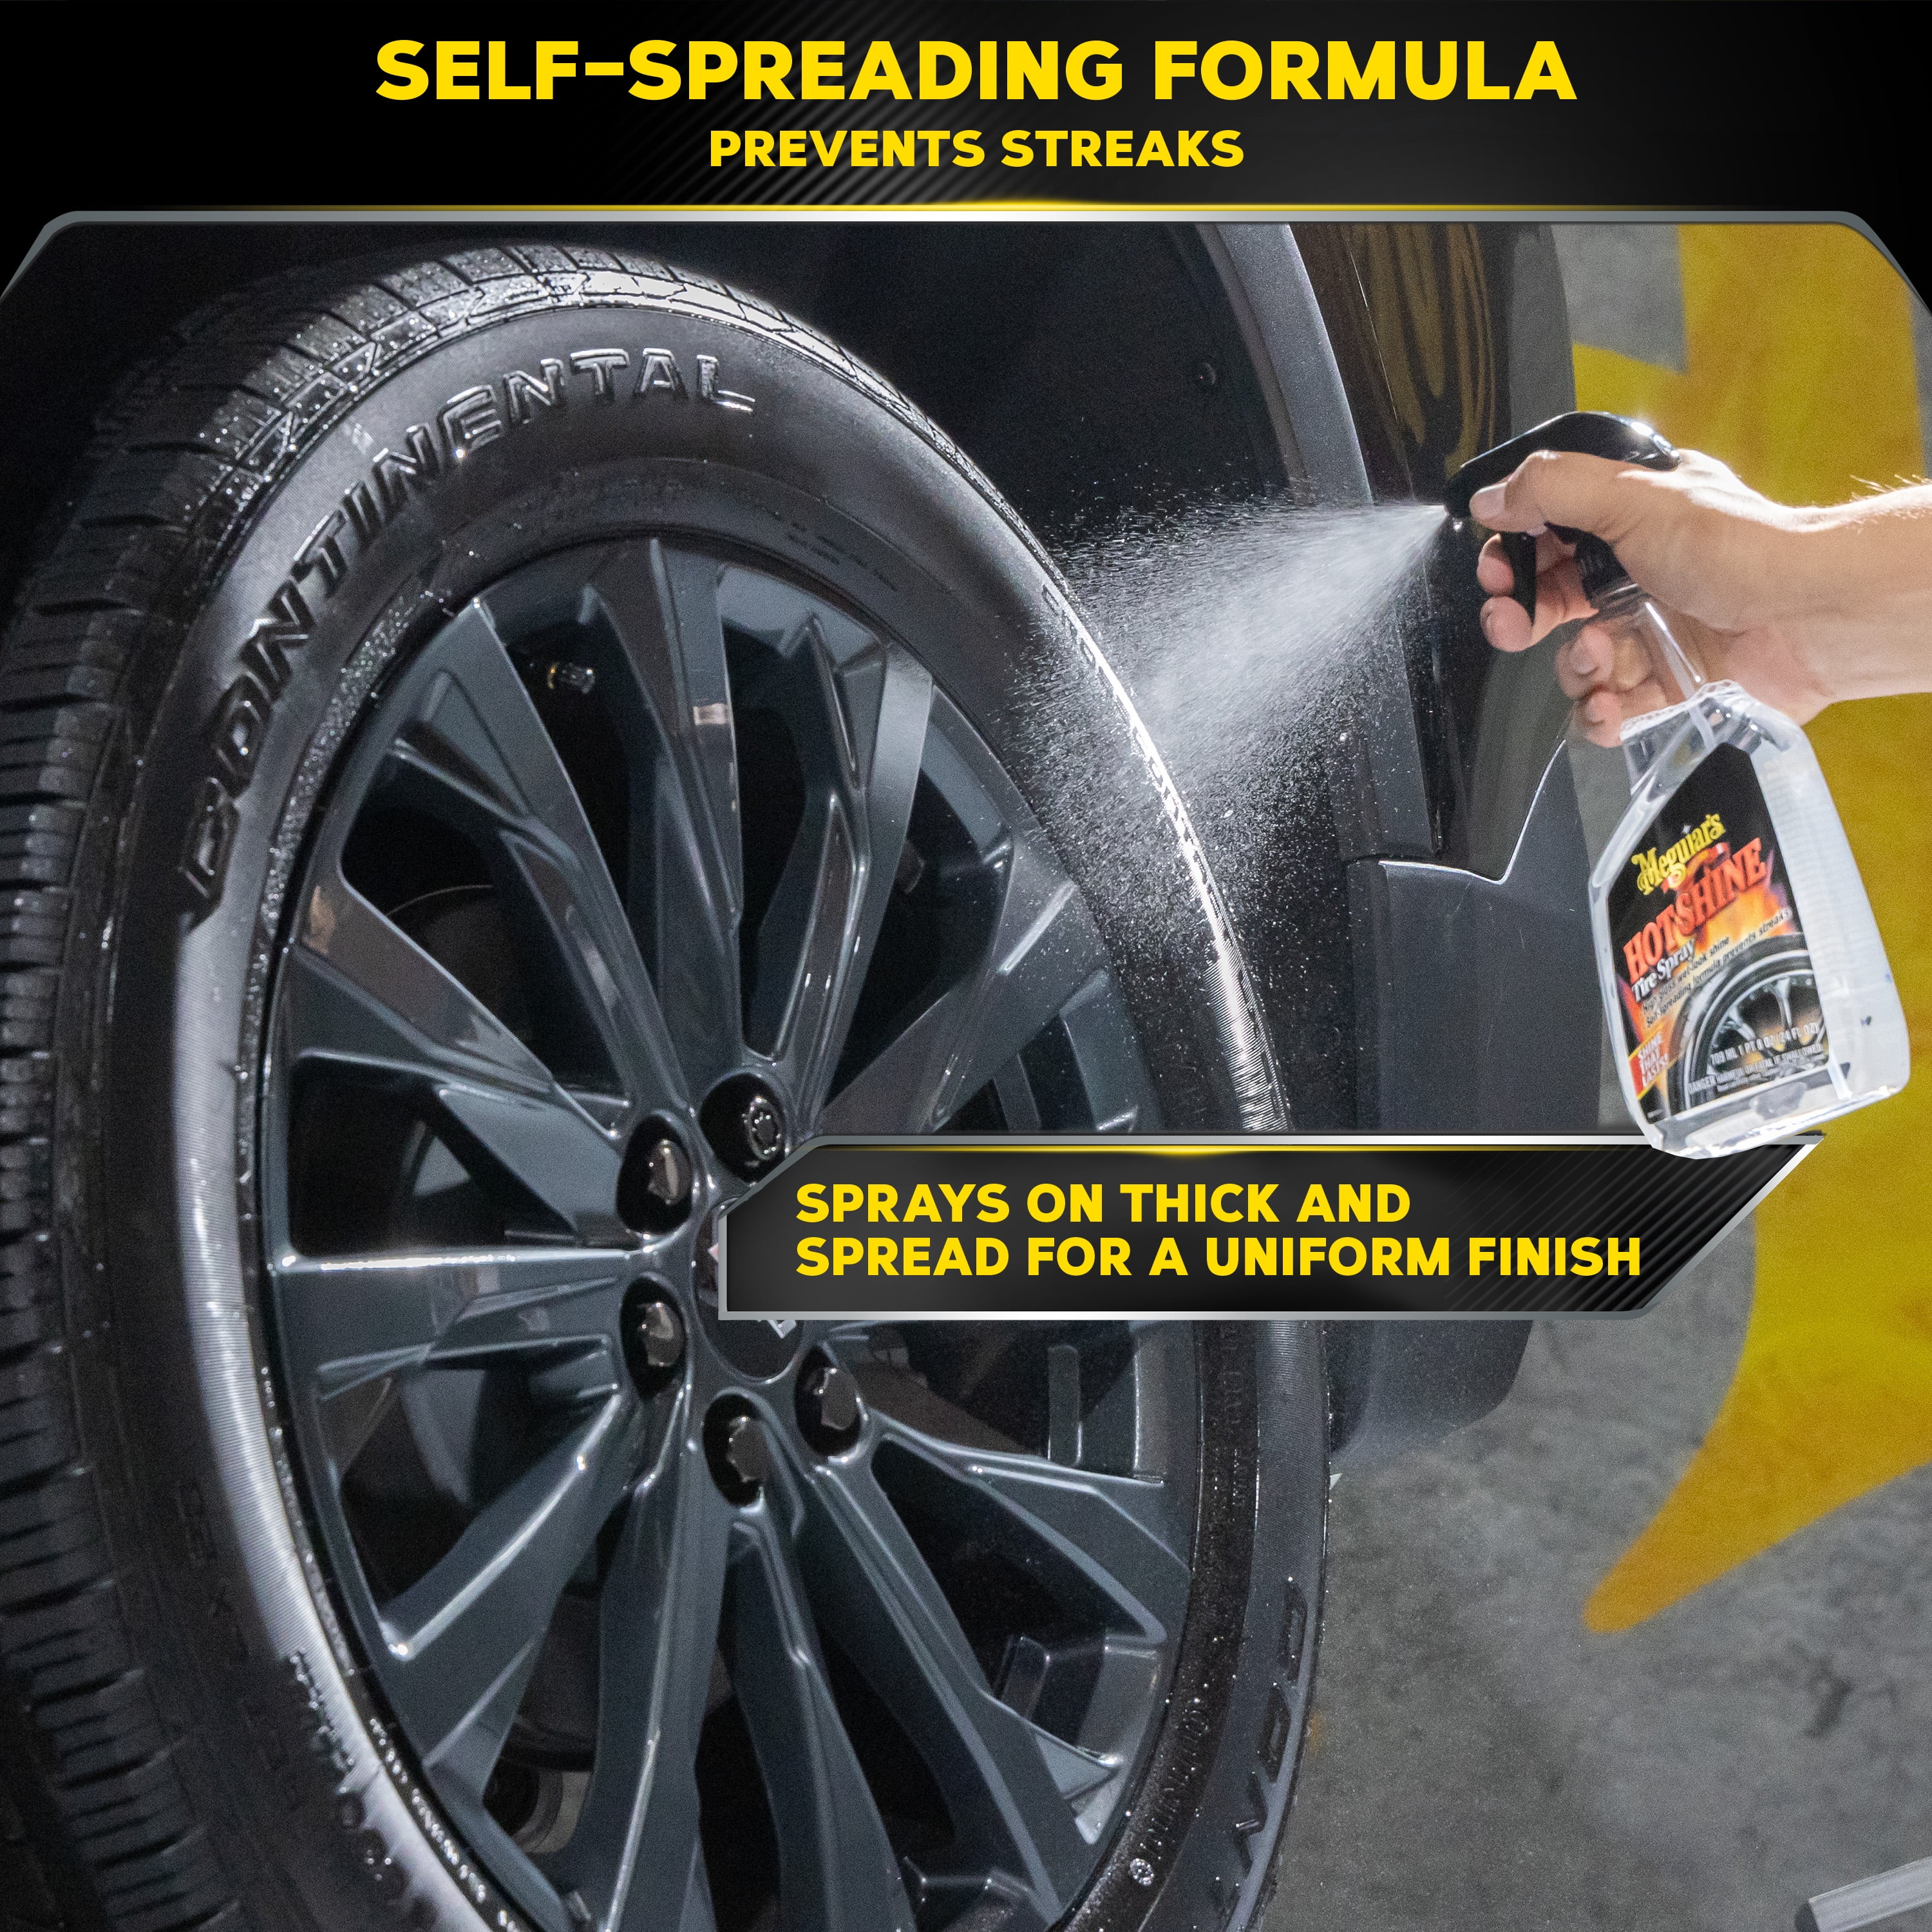 Tyre Shine Spray Meguiar's Hot Shine Reflect, 425ml - G192215EU - Pro  Detailing